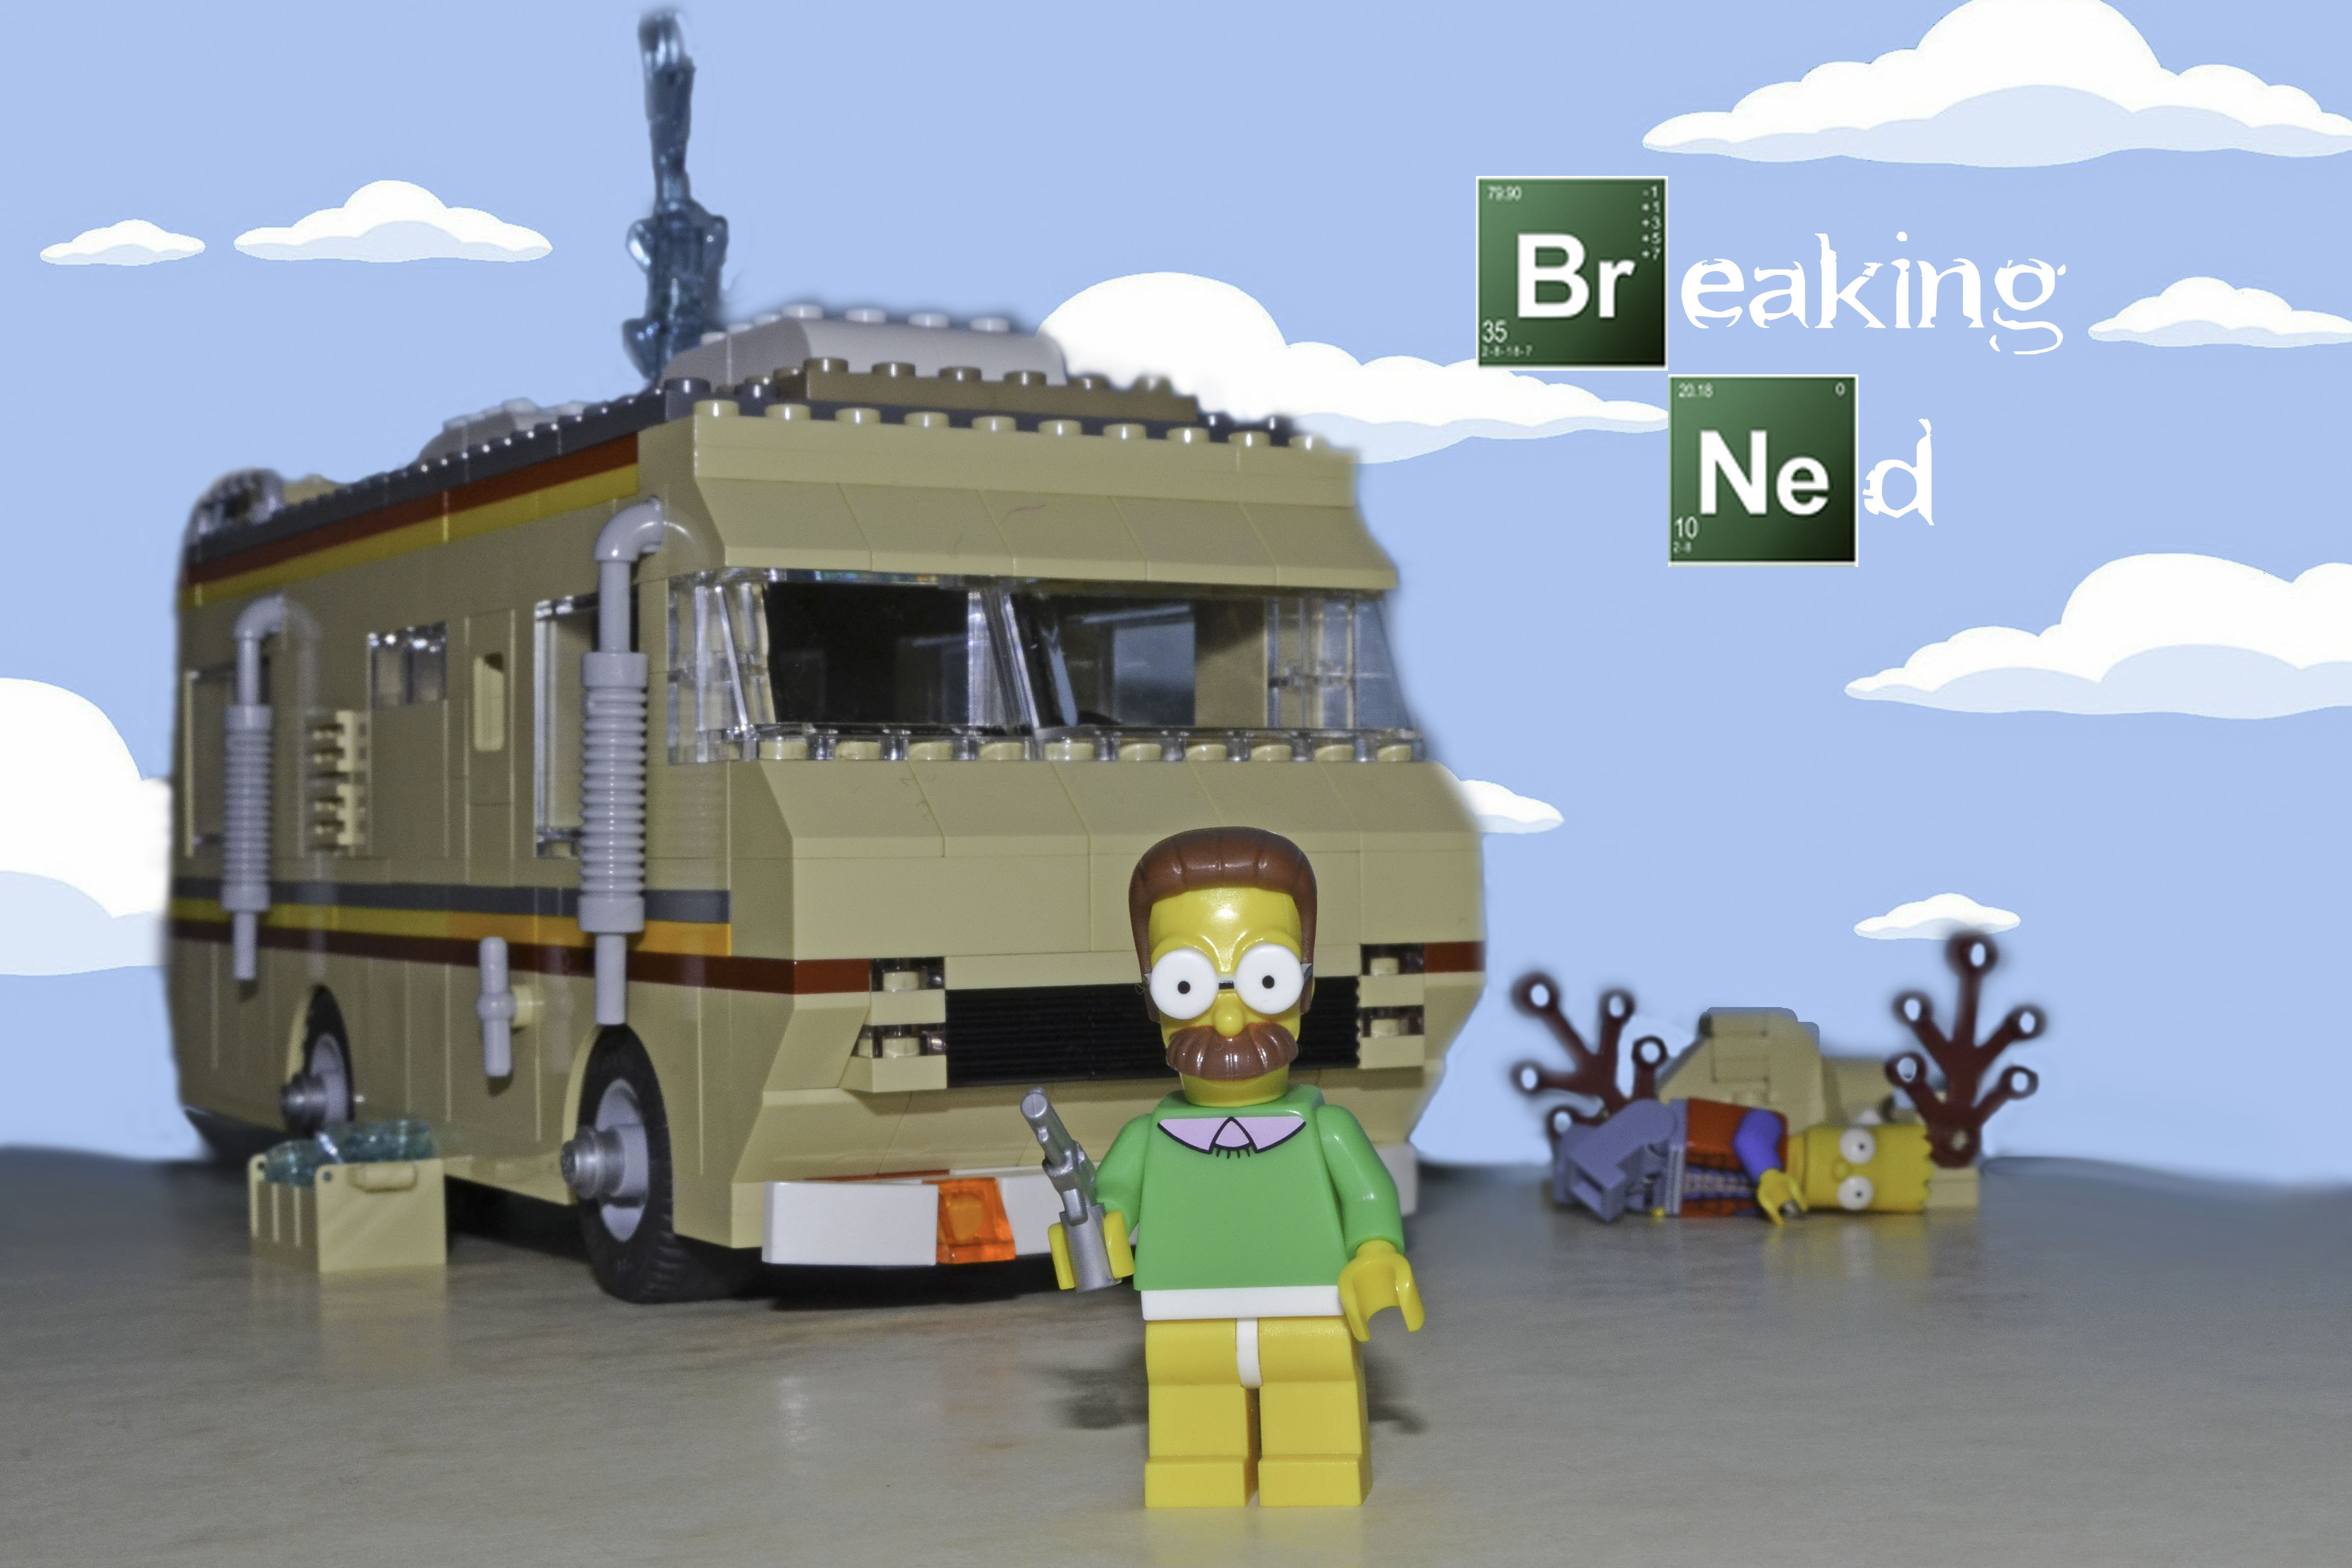 Wallpaper, LEGO, thesimpsons, nedflanders, breakingbad, breakingbadrv, simpsonslego, breakingned, legorv 4612x3075